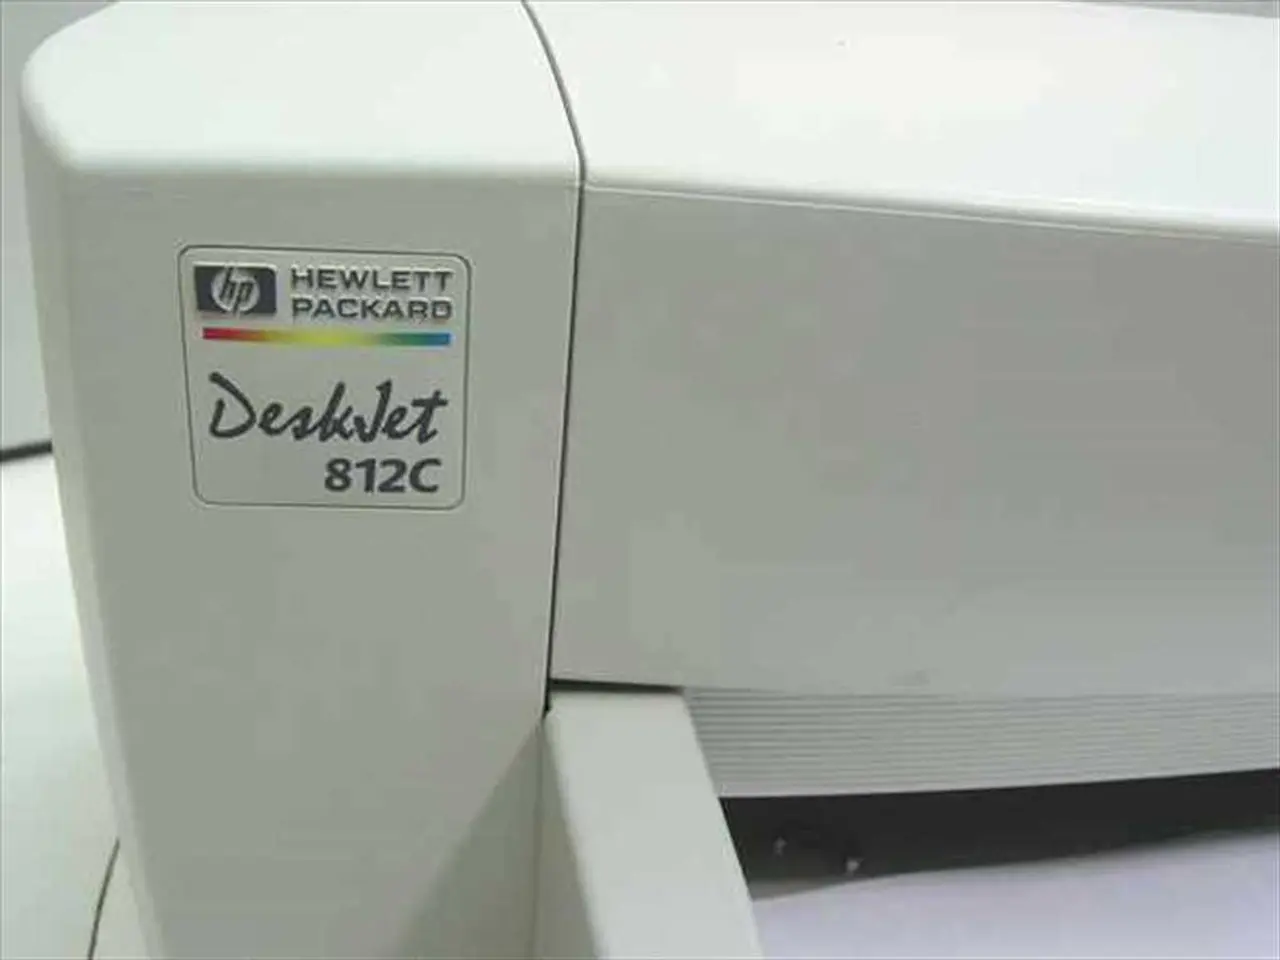 hewlett packard printer 812c - How to install HP printer 4178